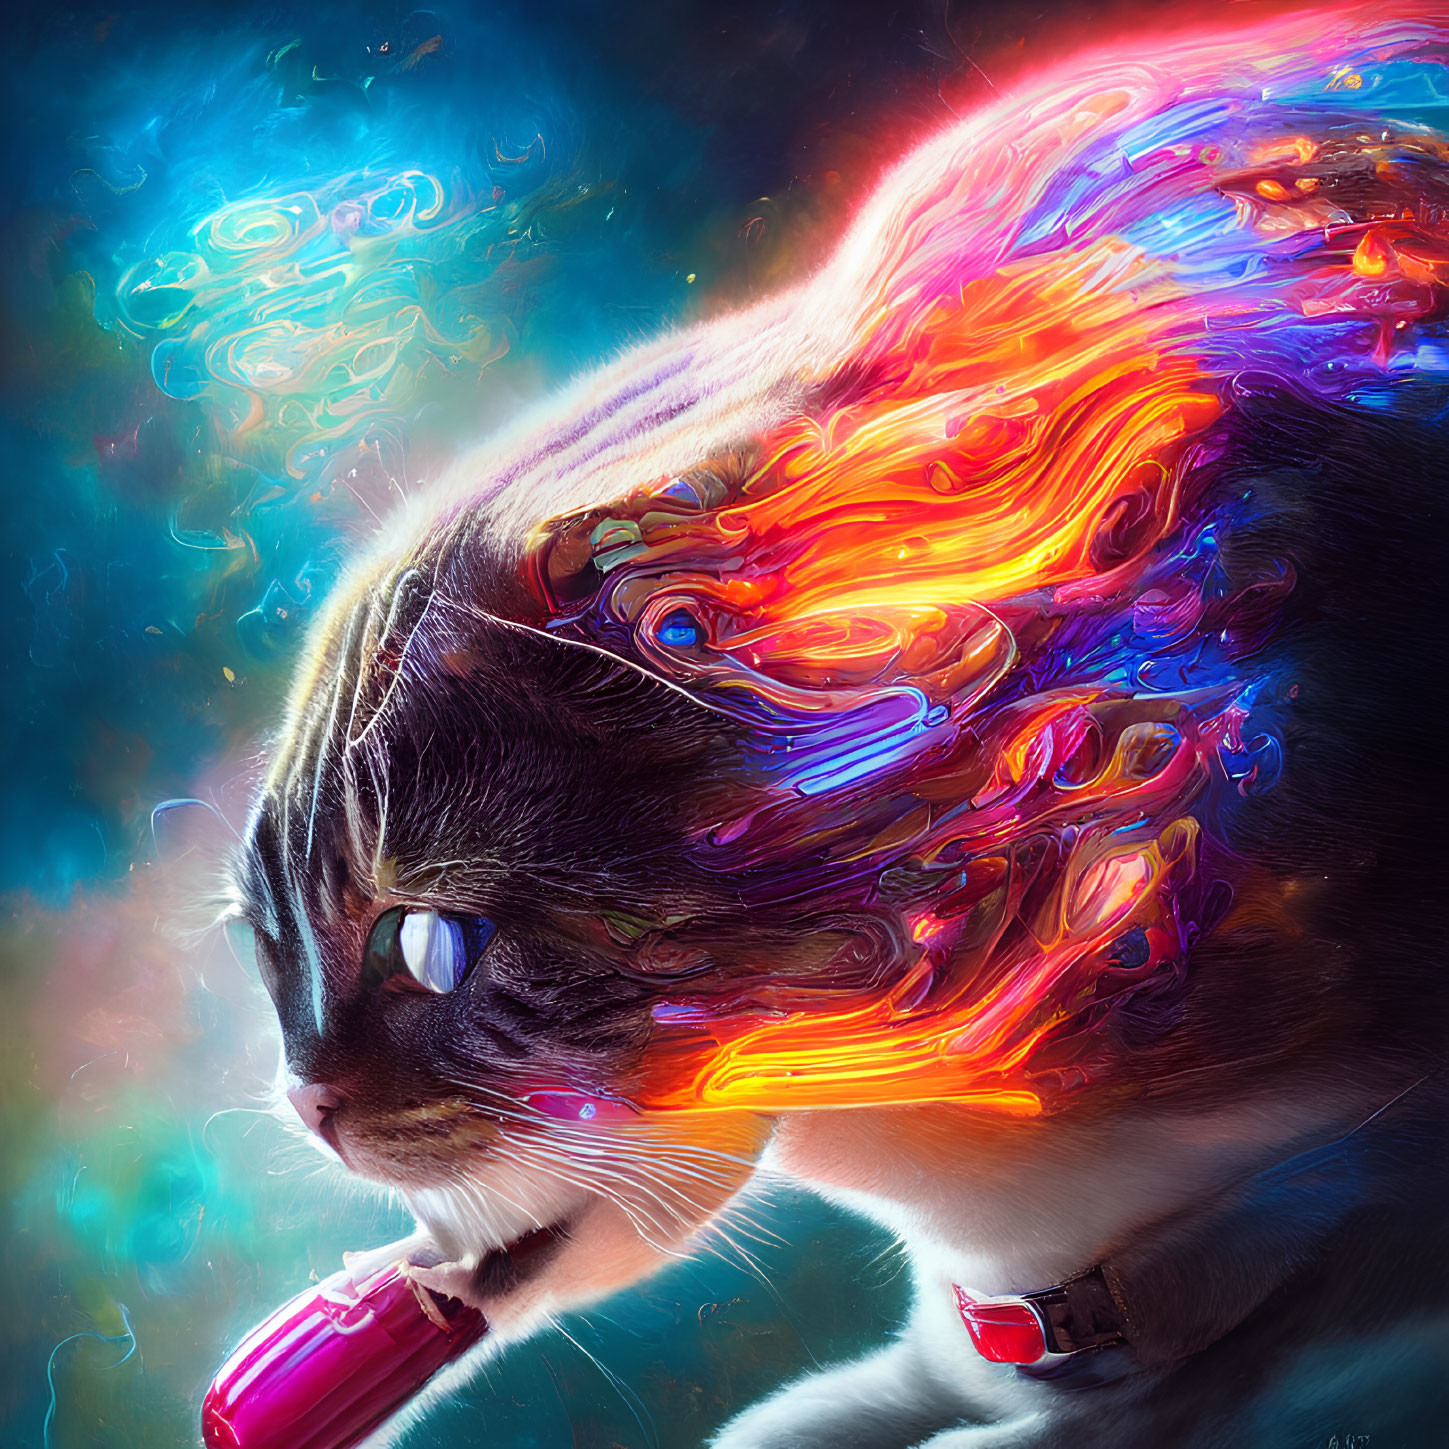 Colorful digital artwork: Cat's brain activity in vibrant swirls